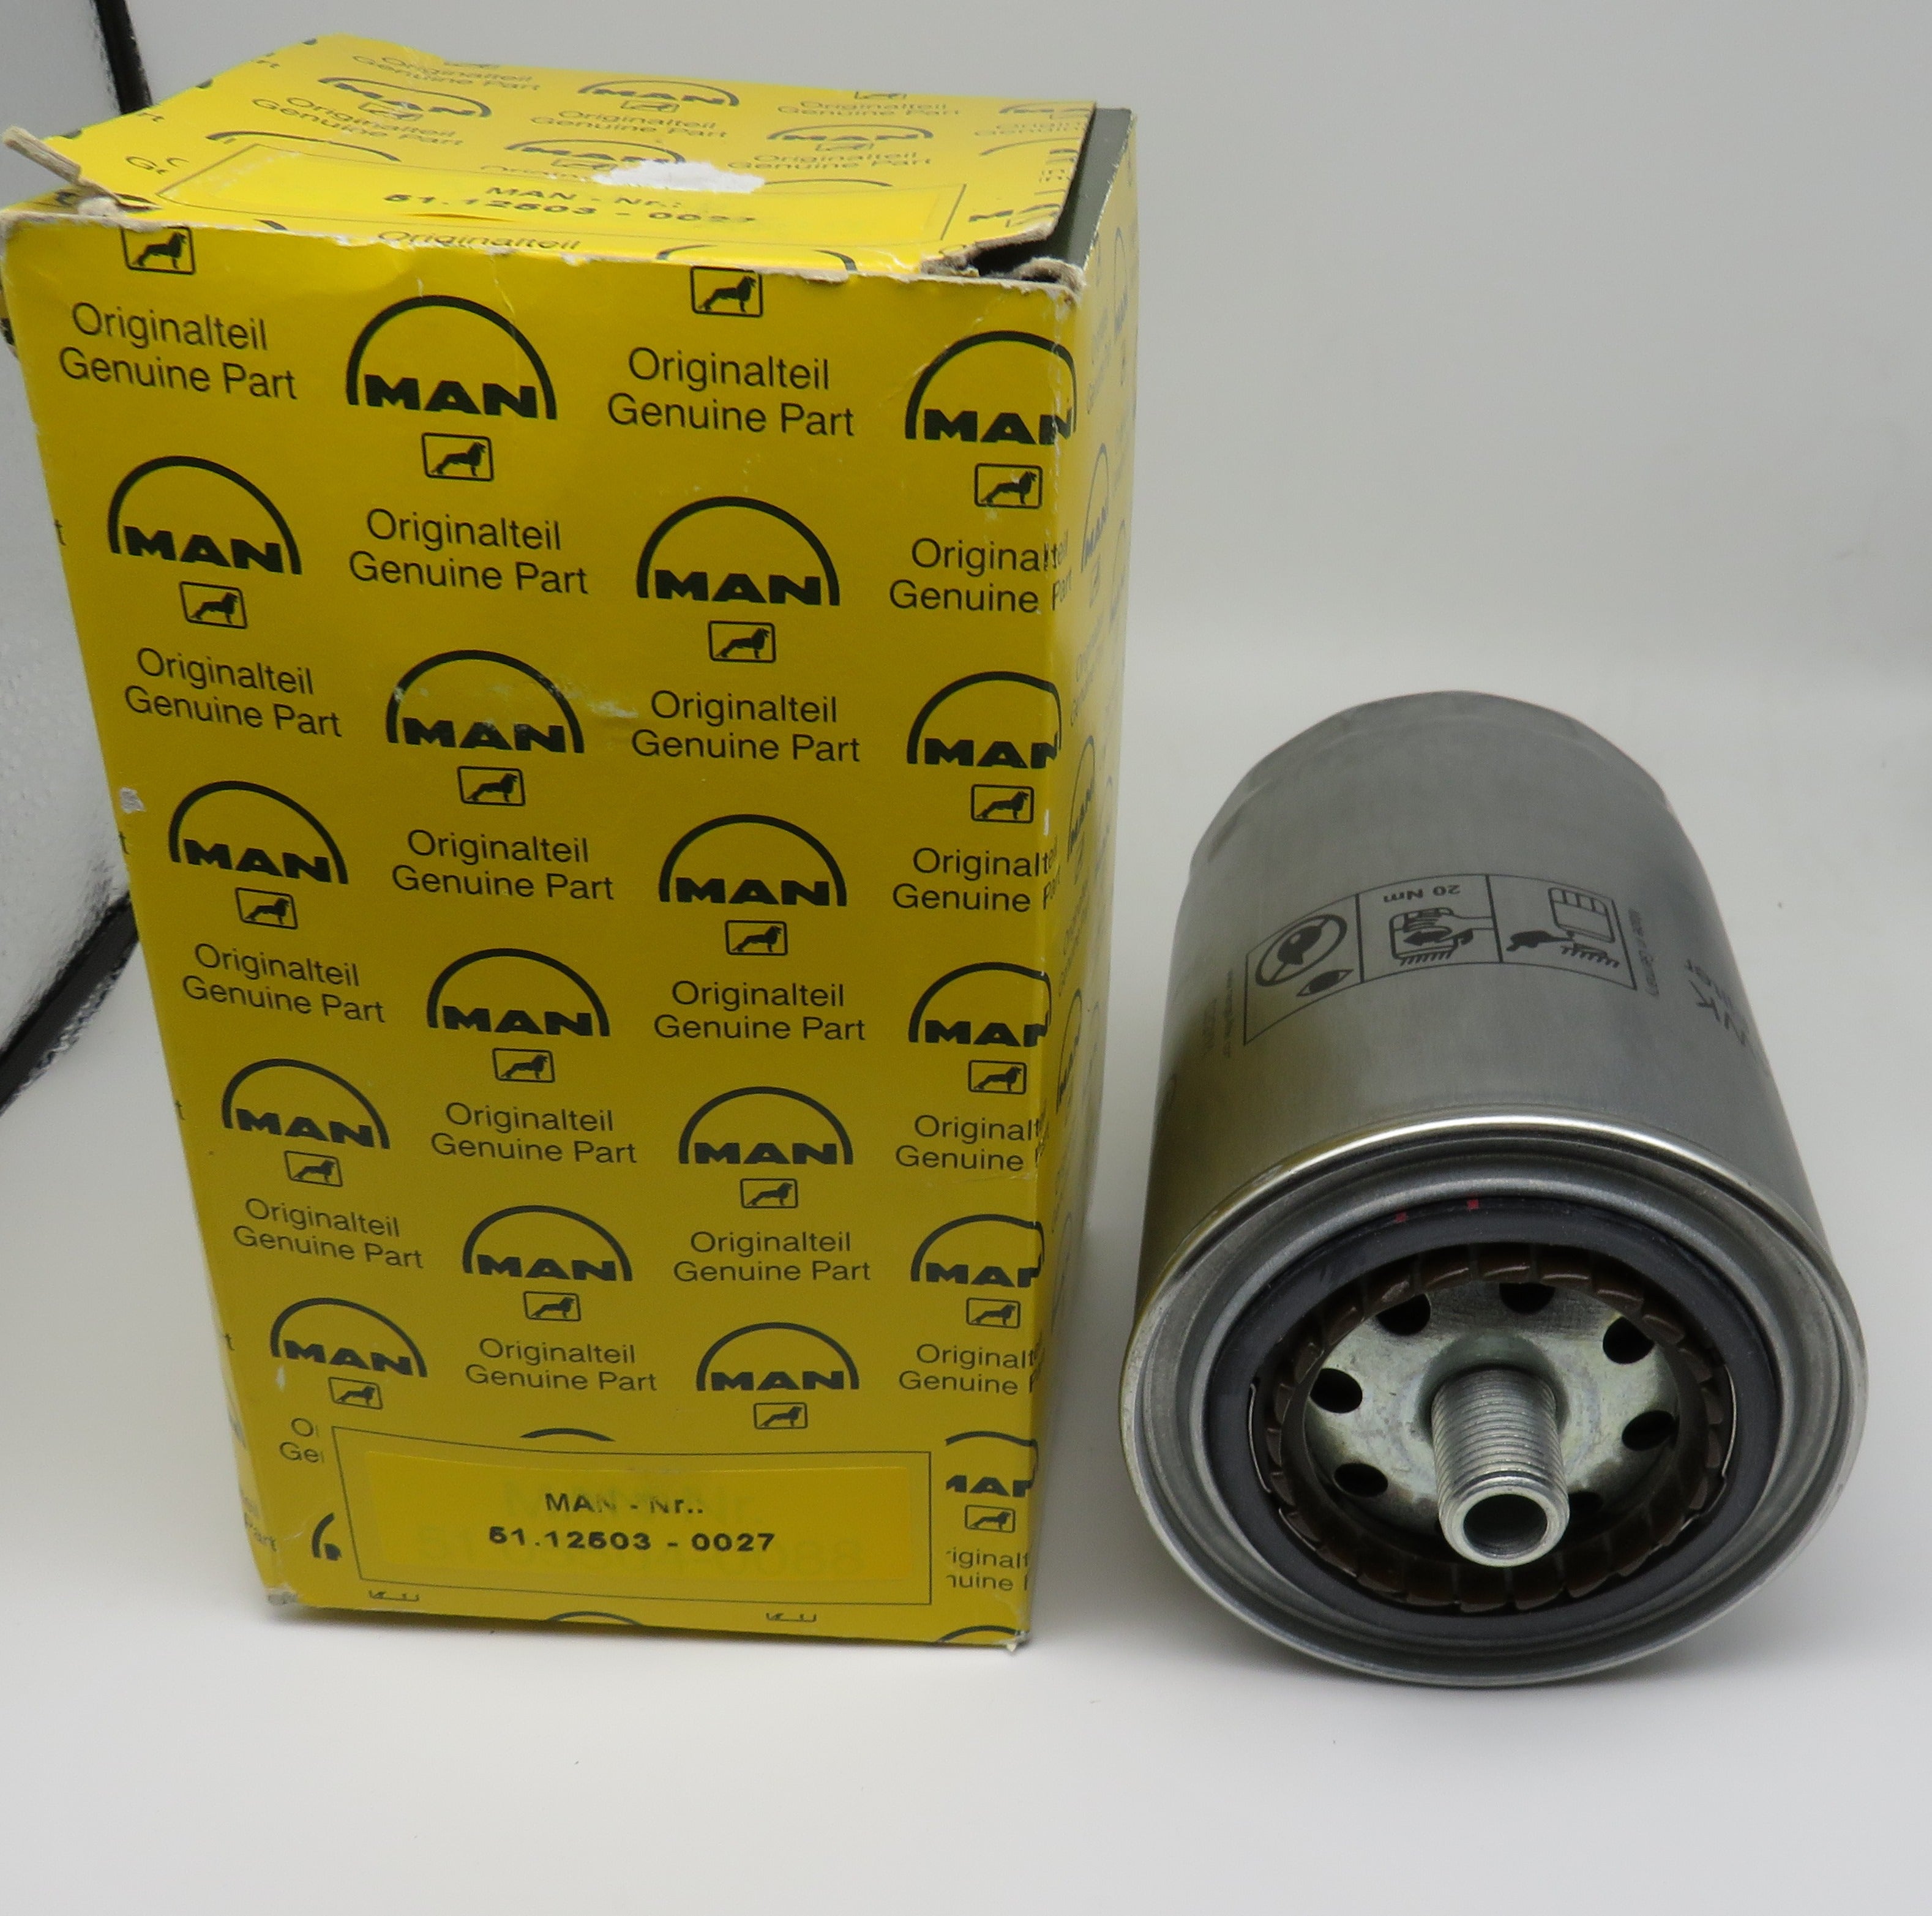 51.12503-0027 Man Fuel Filter (H34WK)